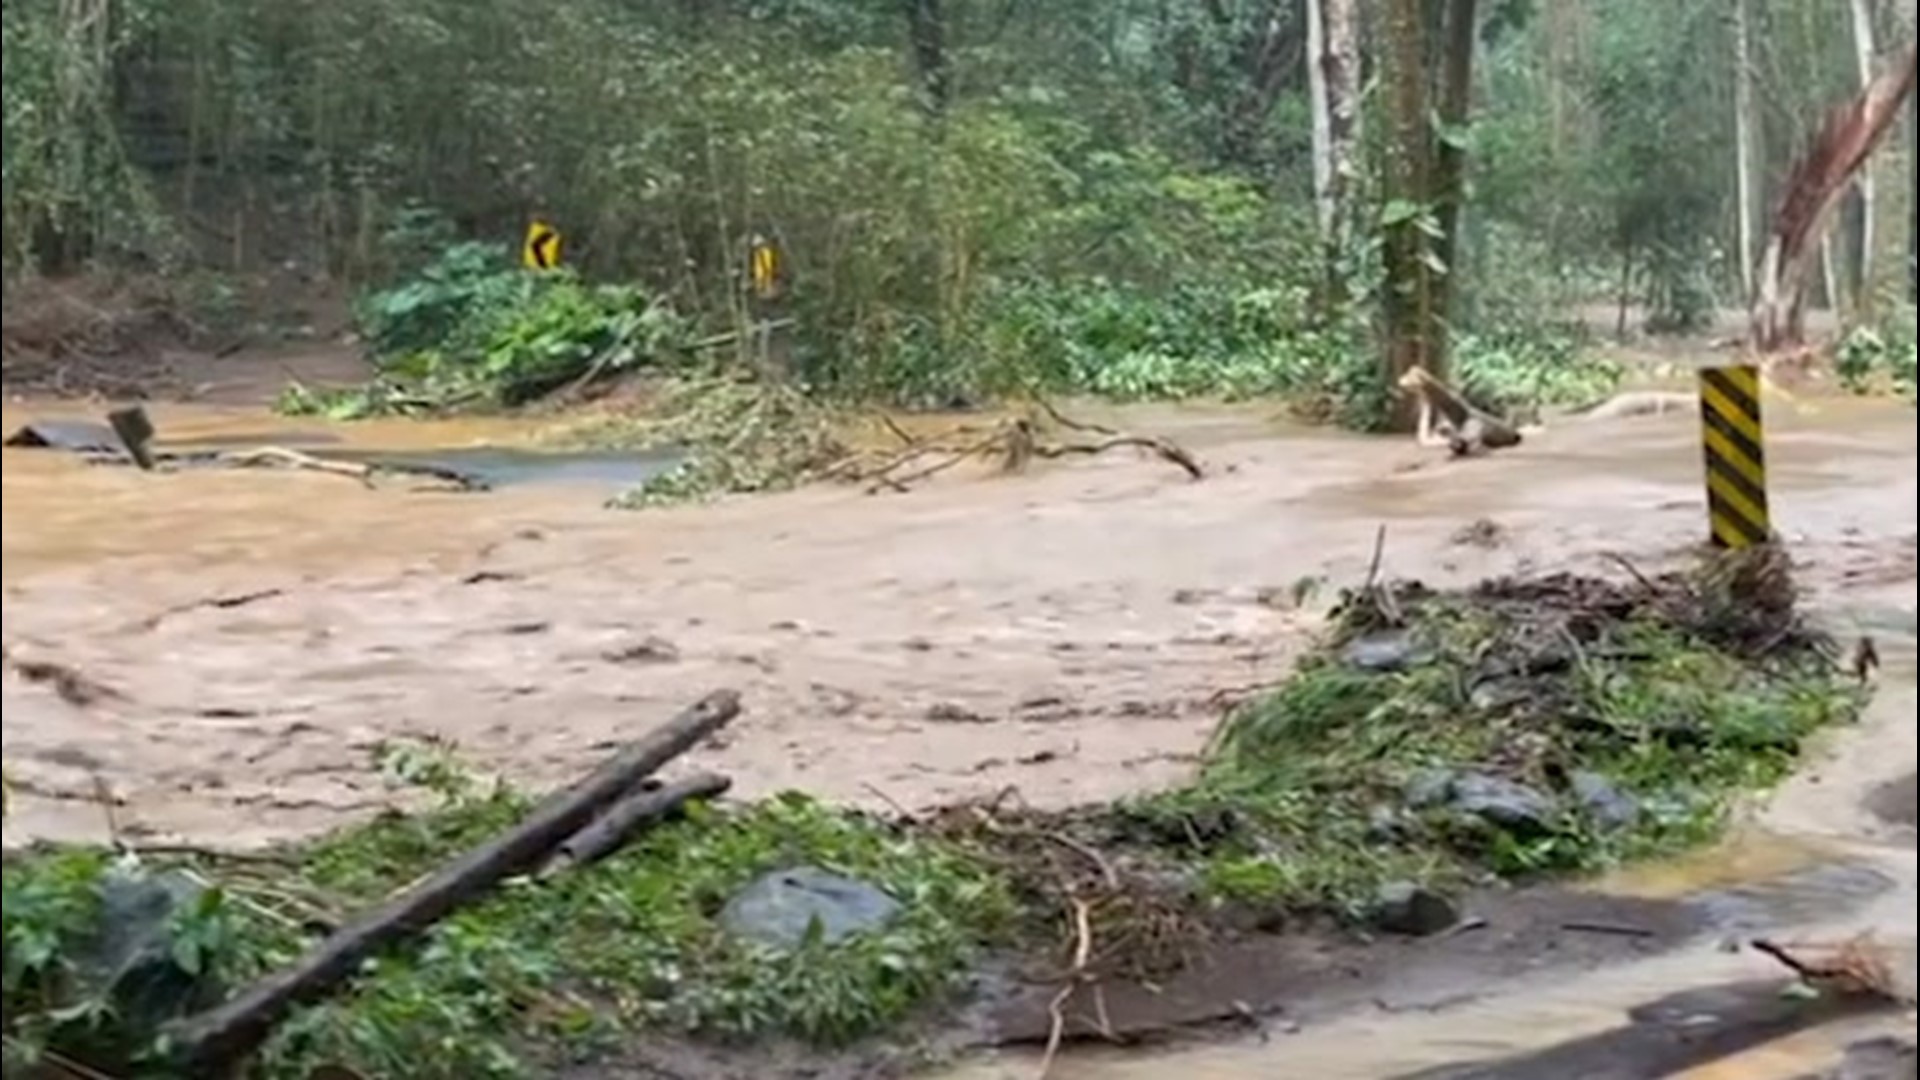 Haiku, Hawaii, experienced severe flash flooding after Kaupakalua Dam was breached thanks to heavy rain on March 8.